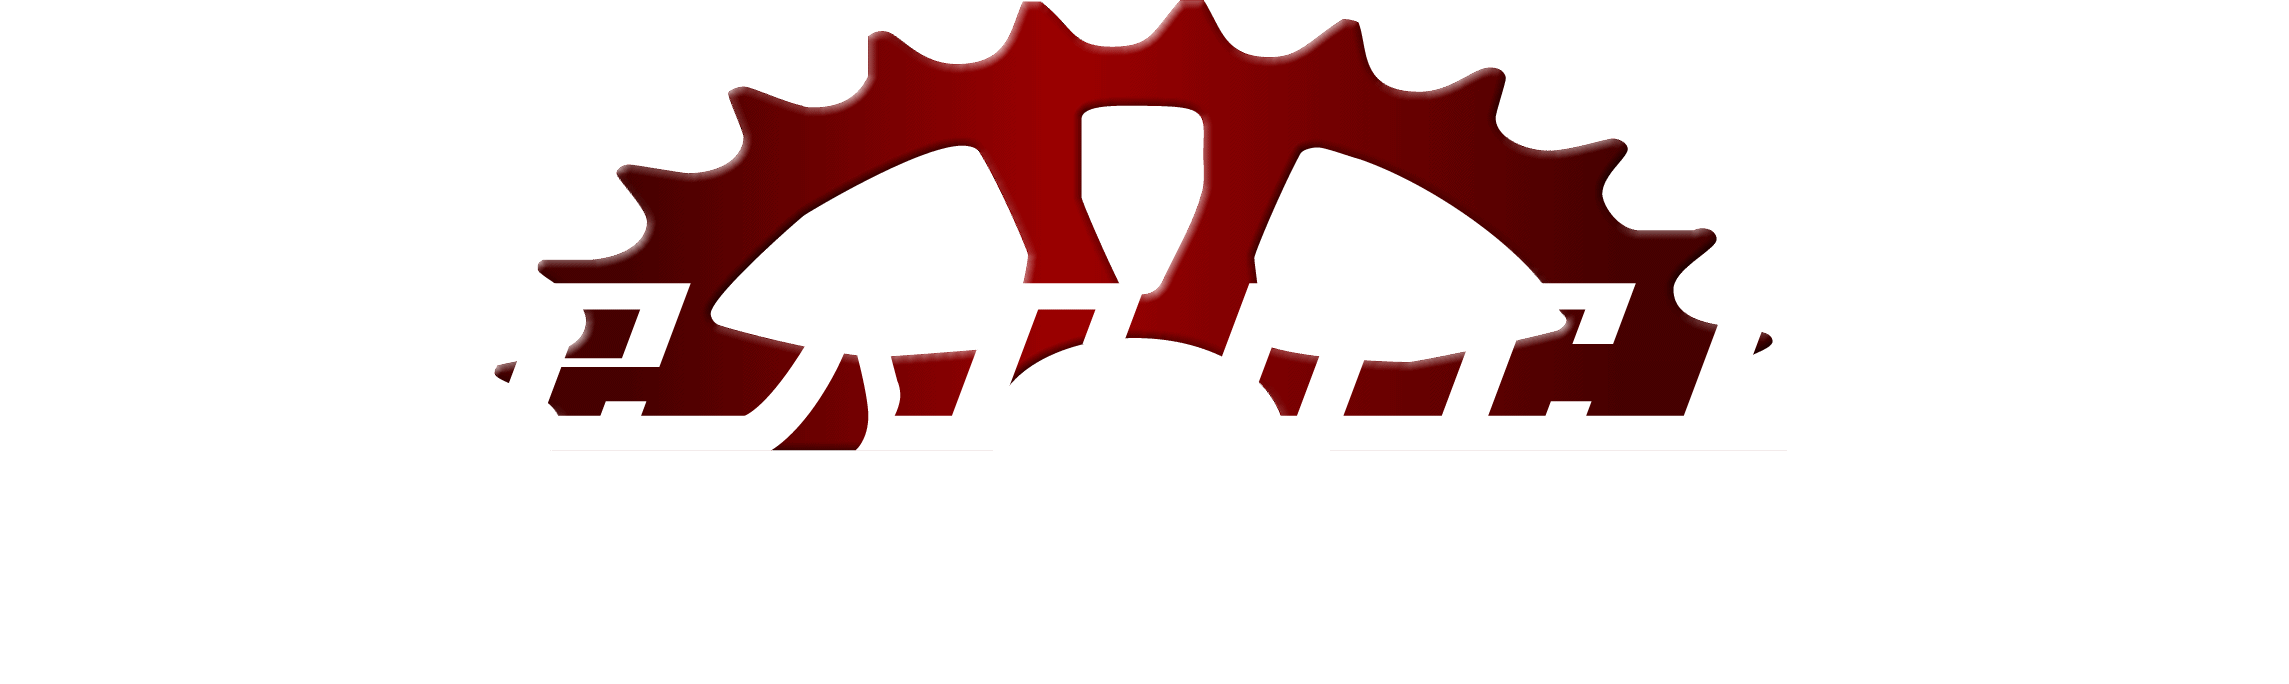 Dees Cycles logo